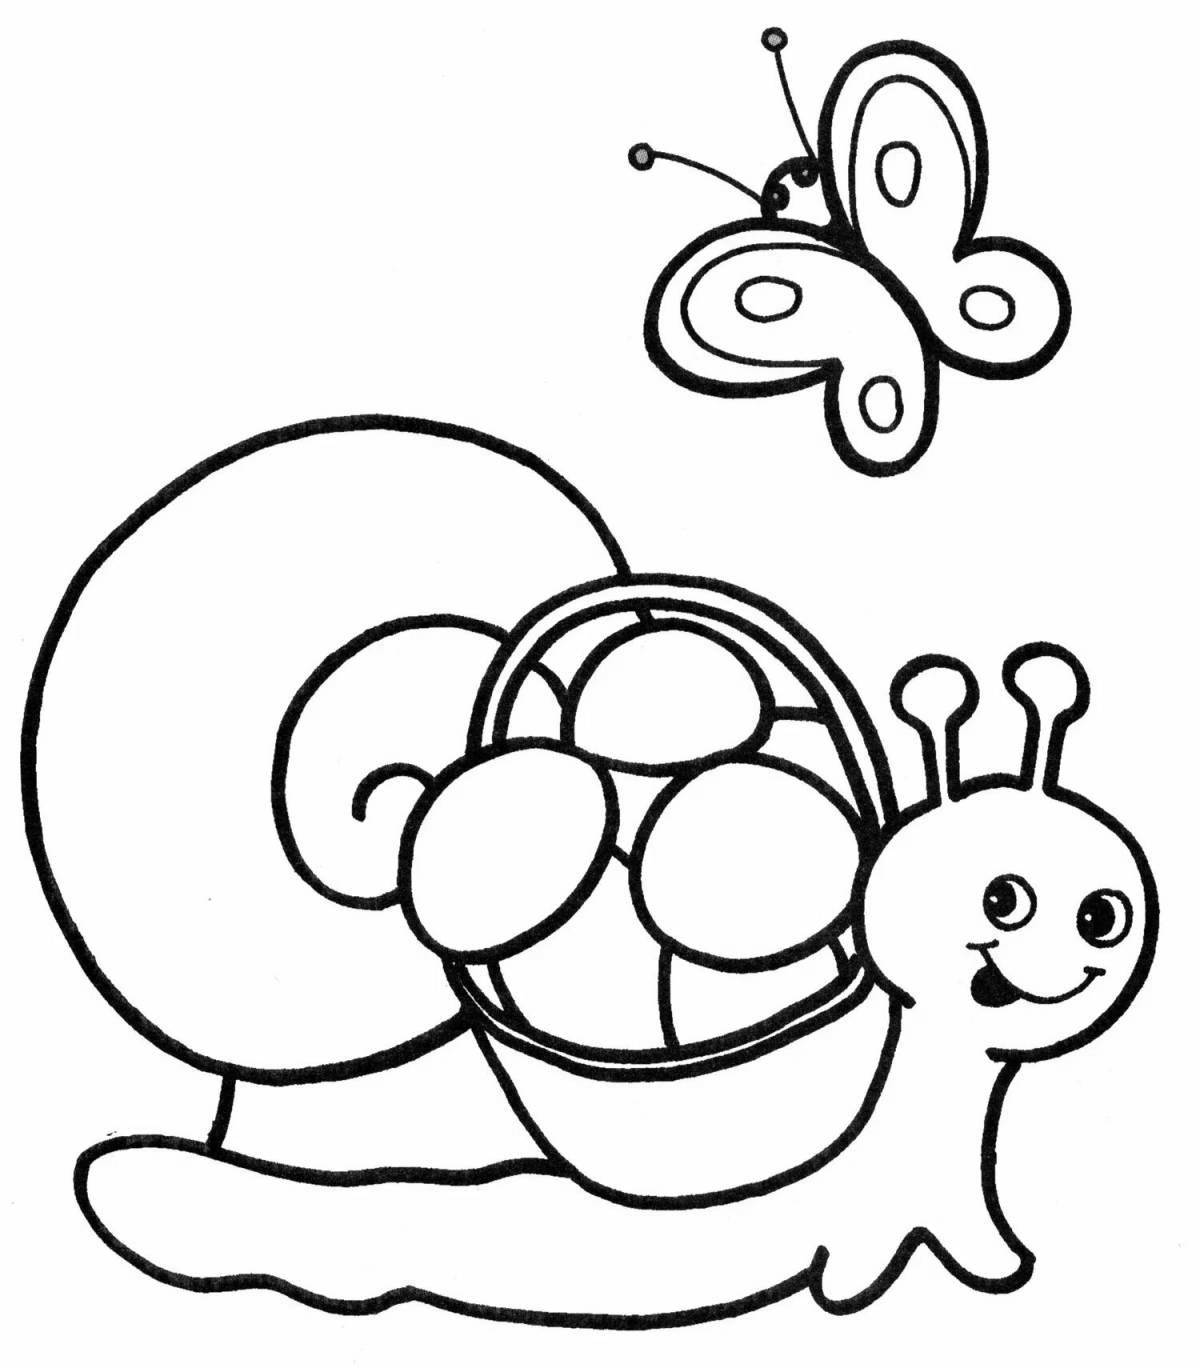 A fun snail coloring book for preschoolers